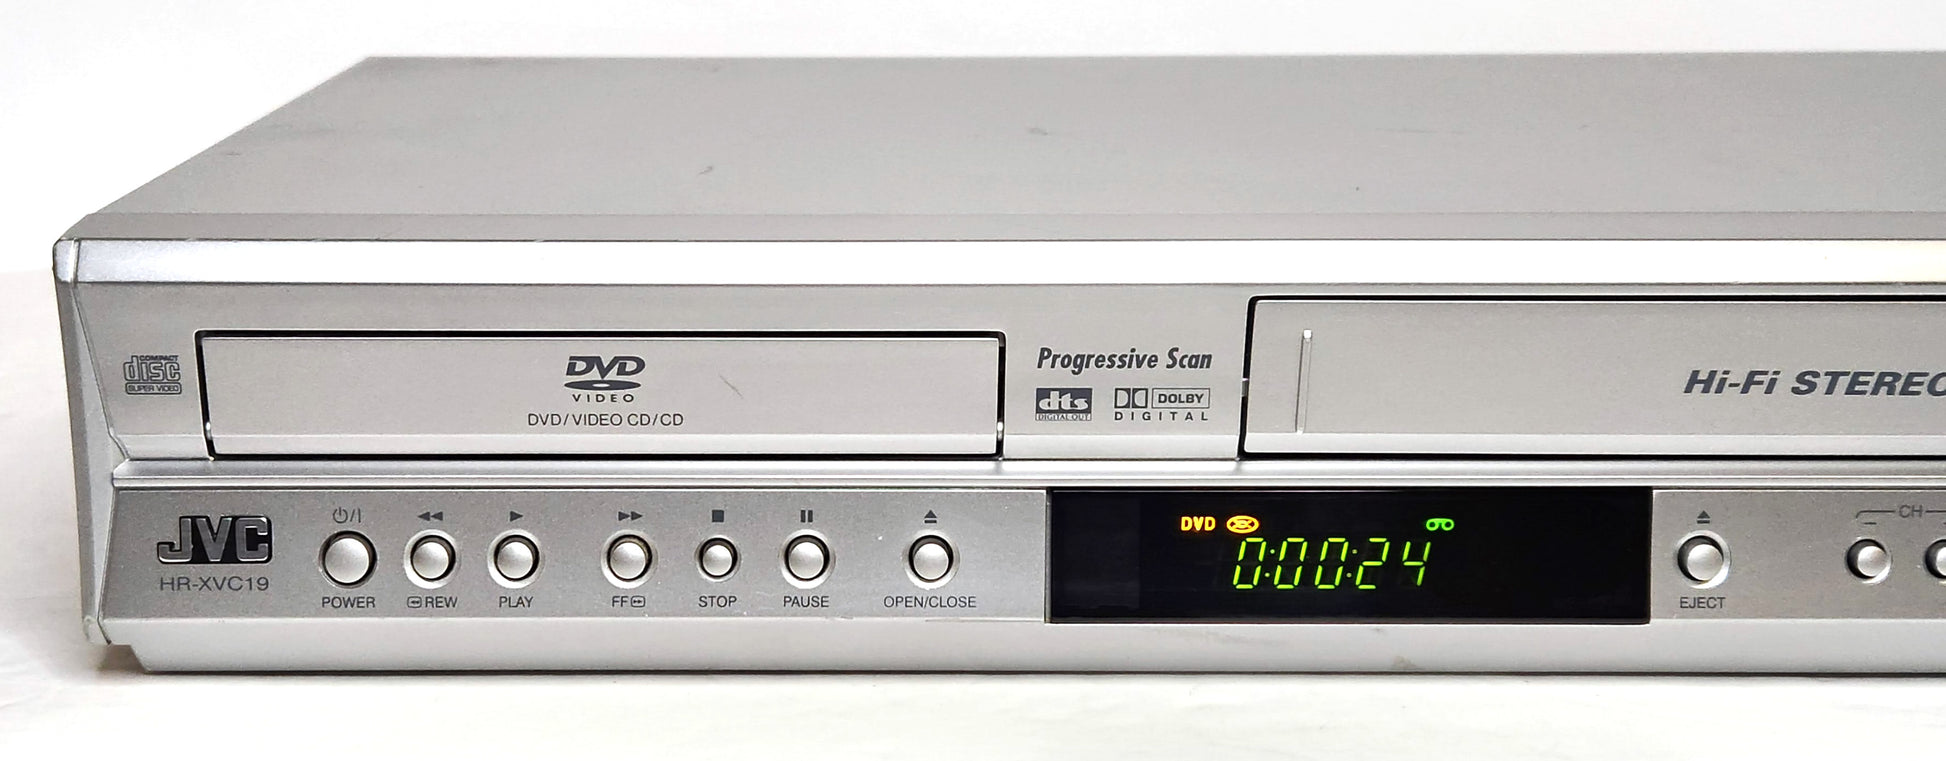 JVC HR-XVC19SU VCR/DVD Player Combo - Left